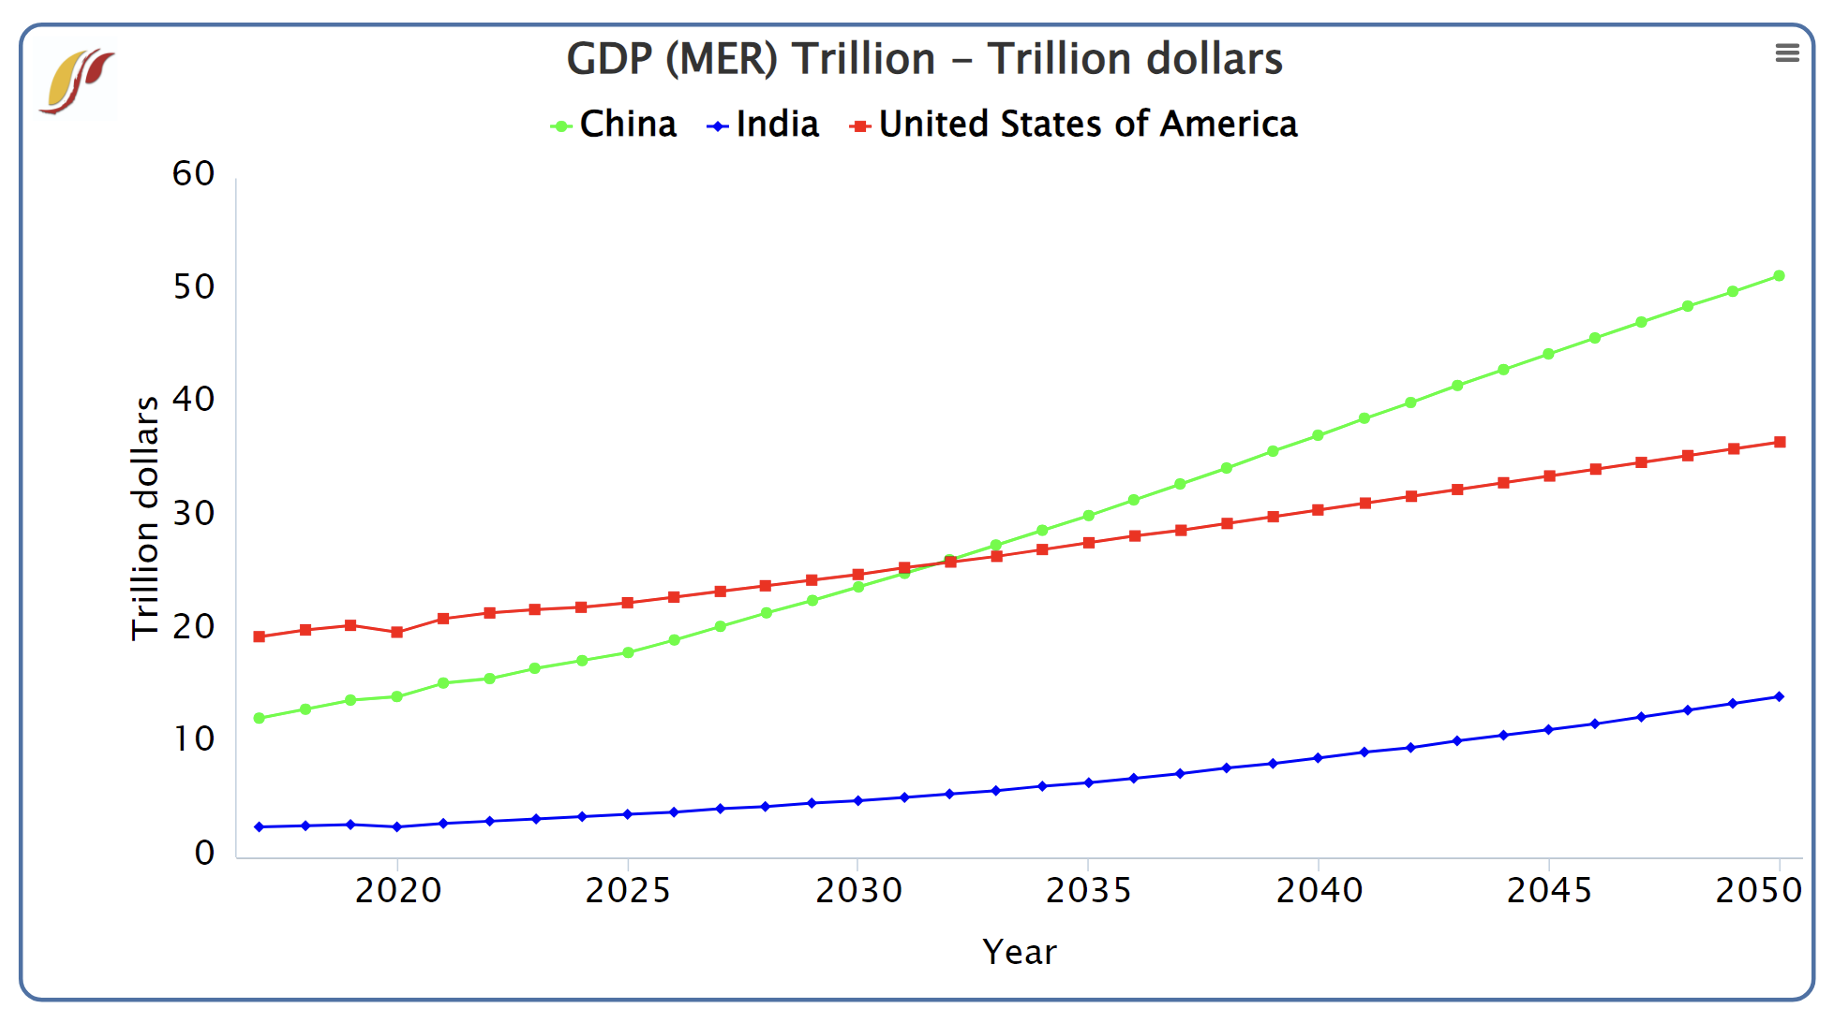 GDP (MER) trillion - trillion dollars